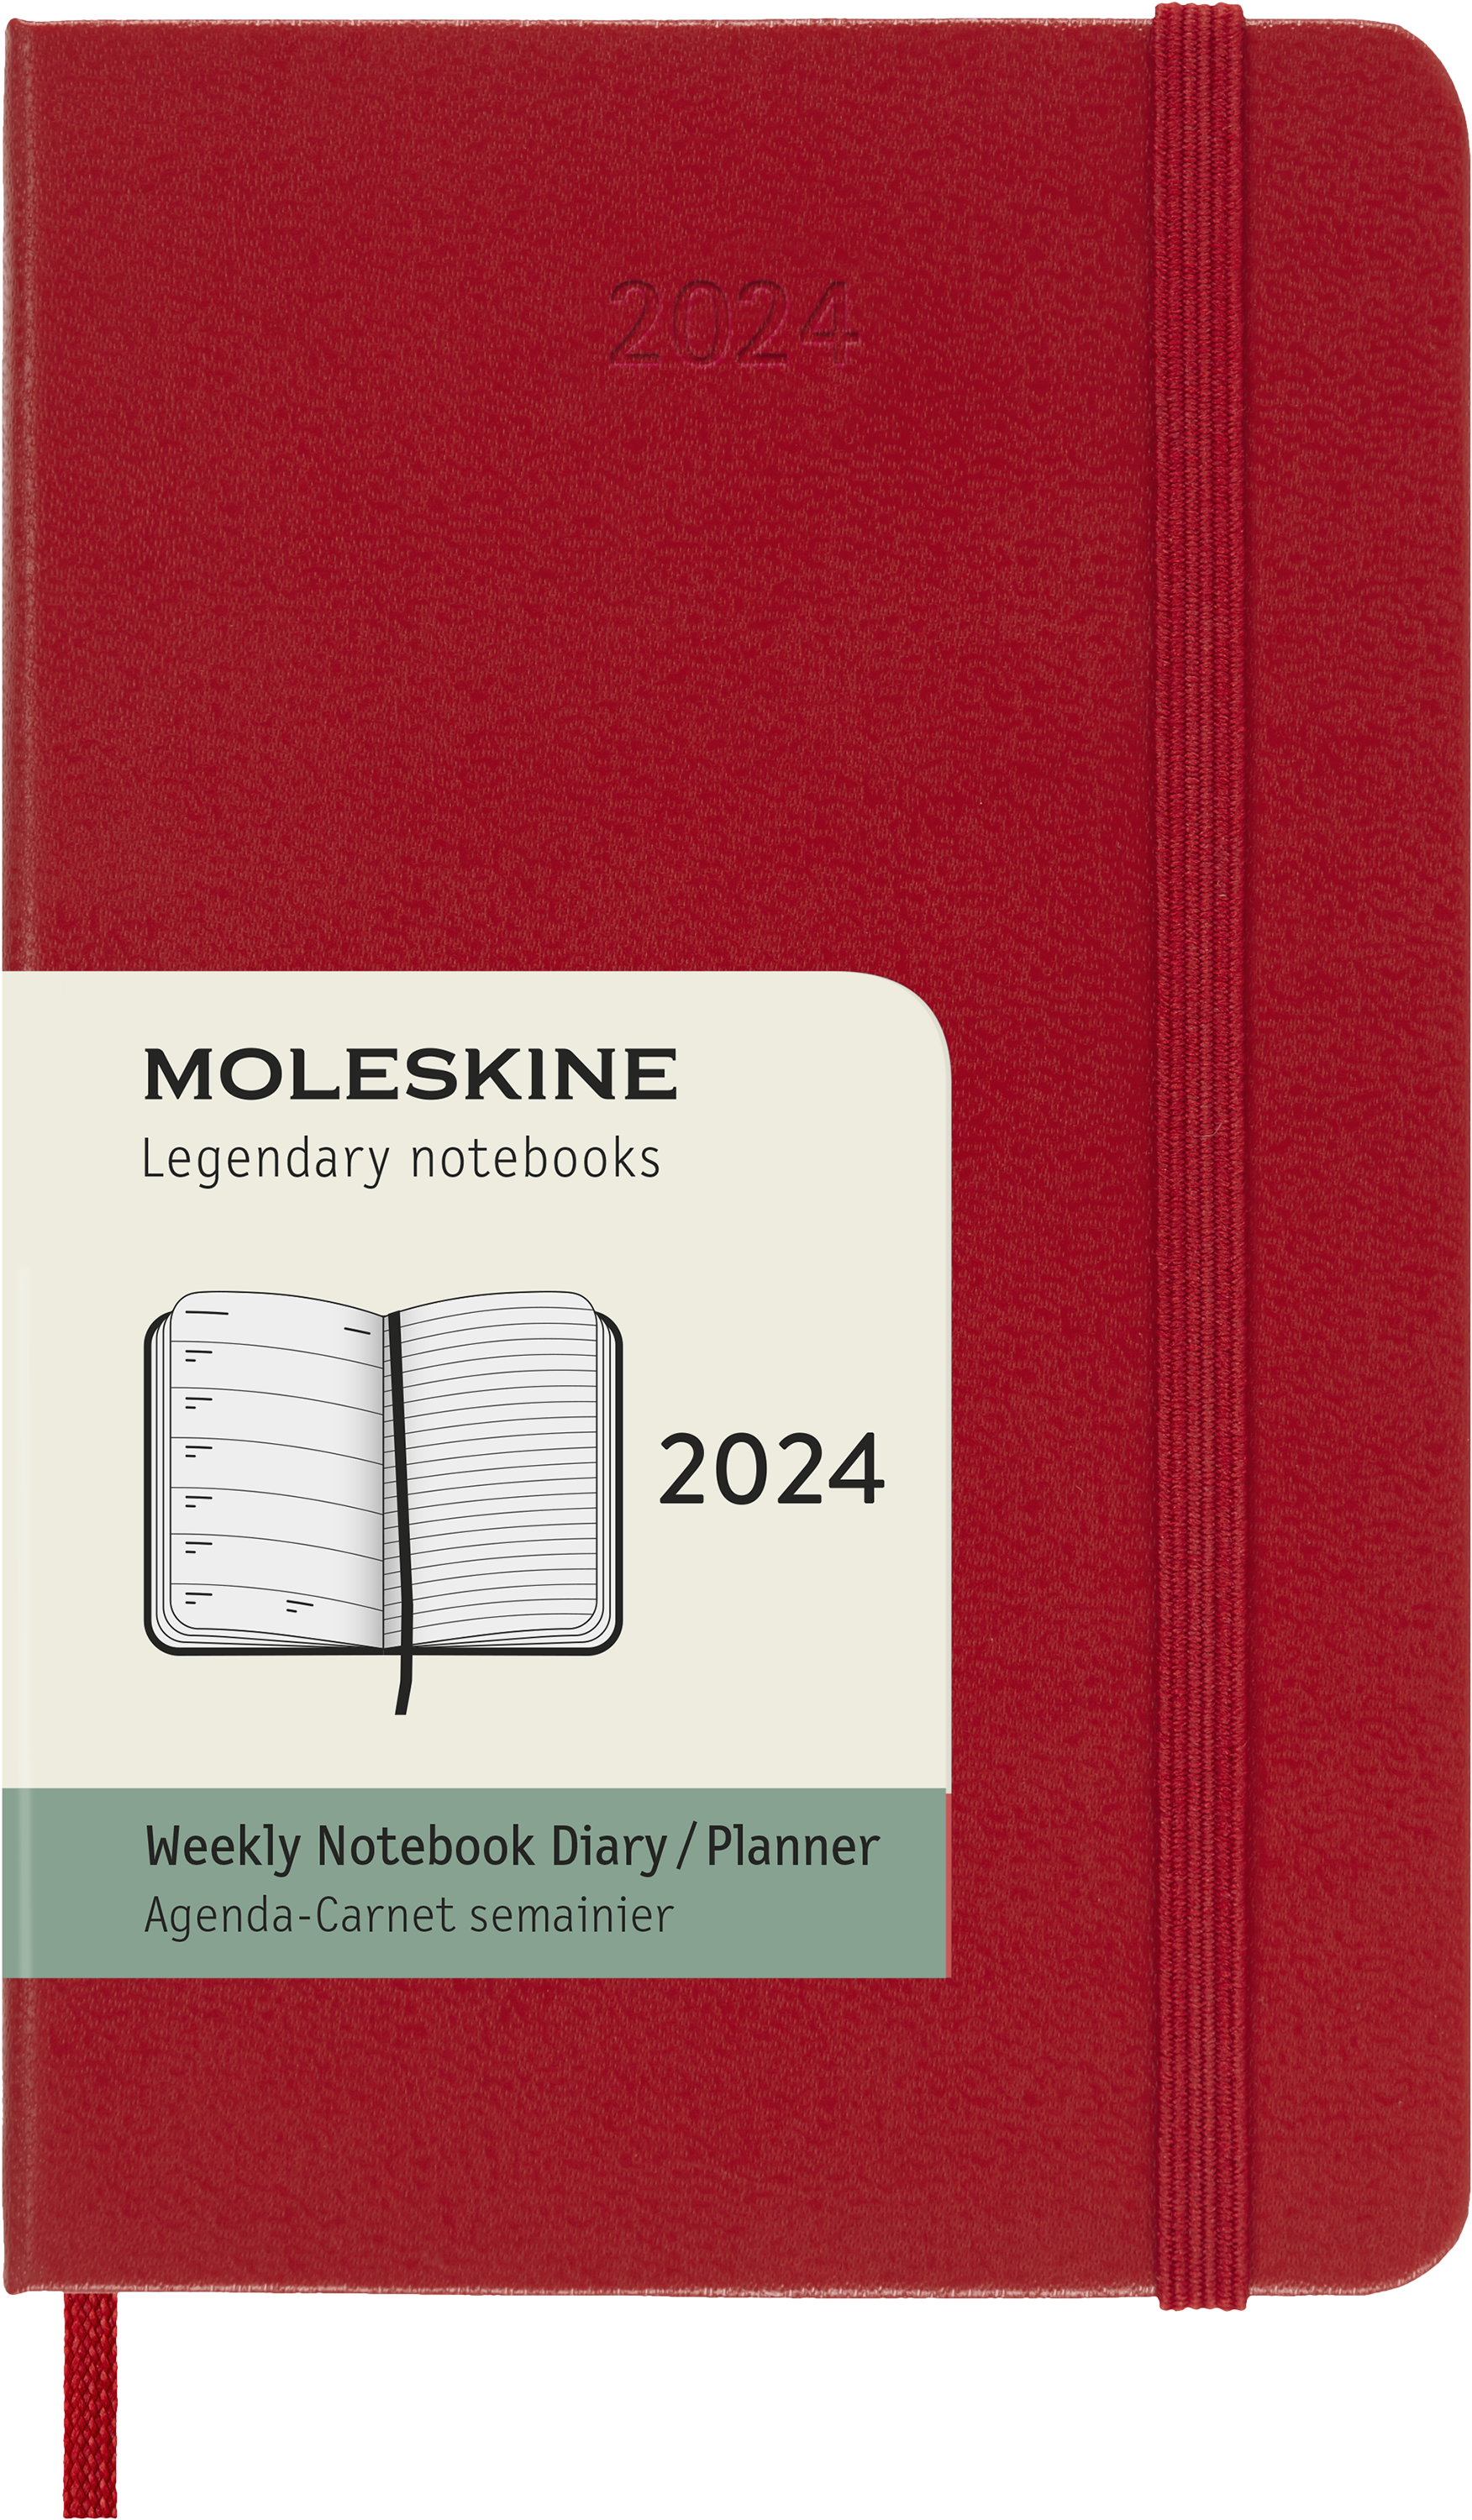 Moleskine 2024 agenda hardcover pocket week